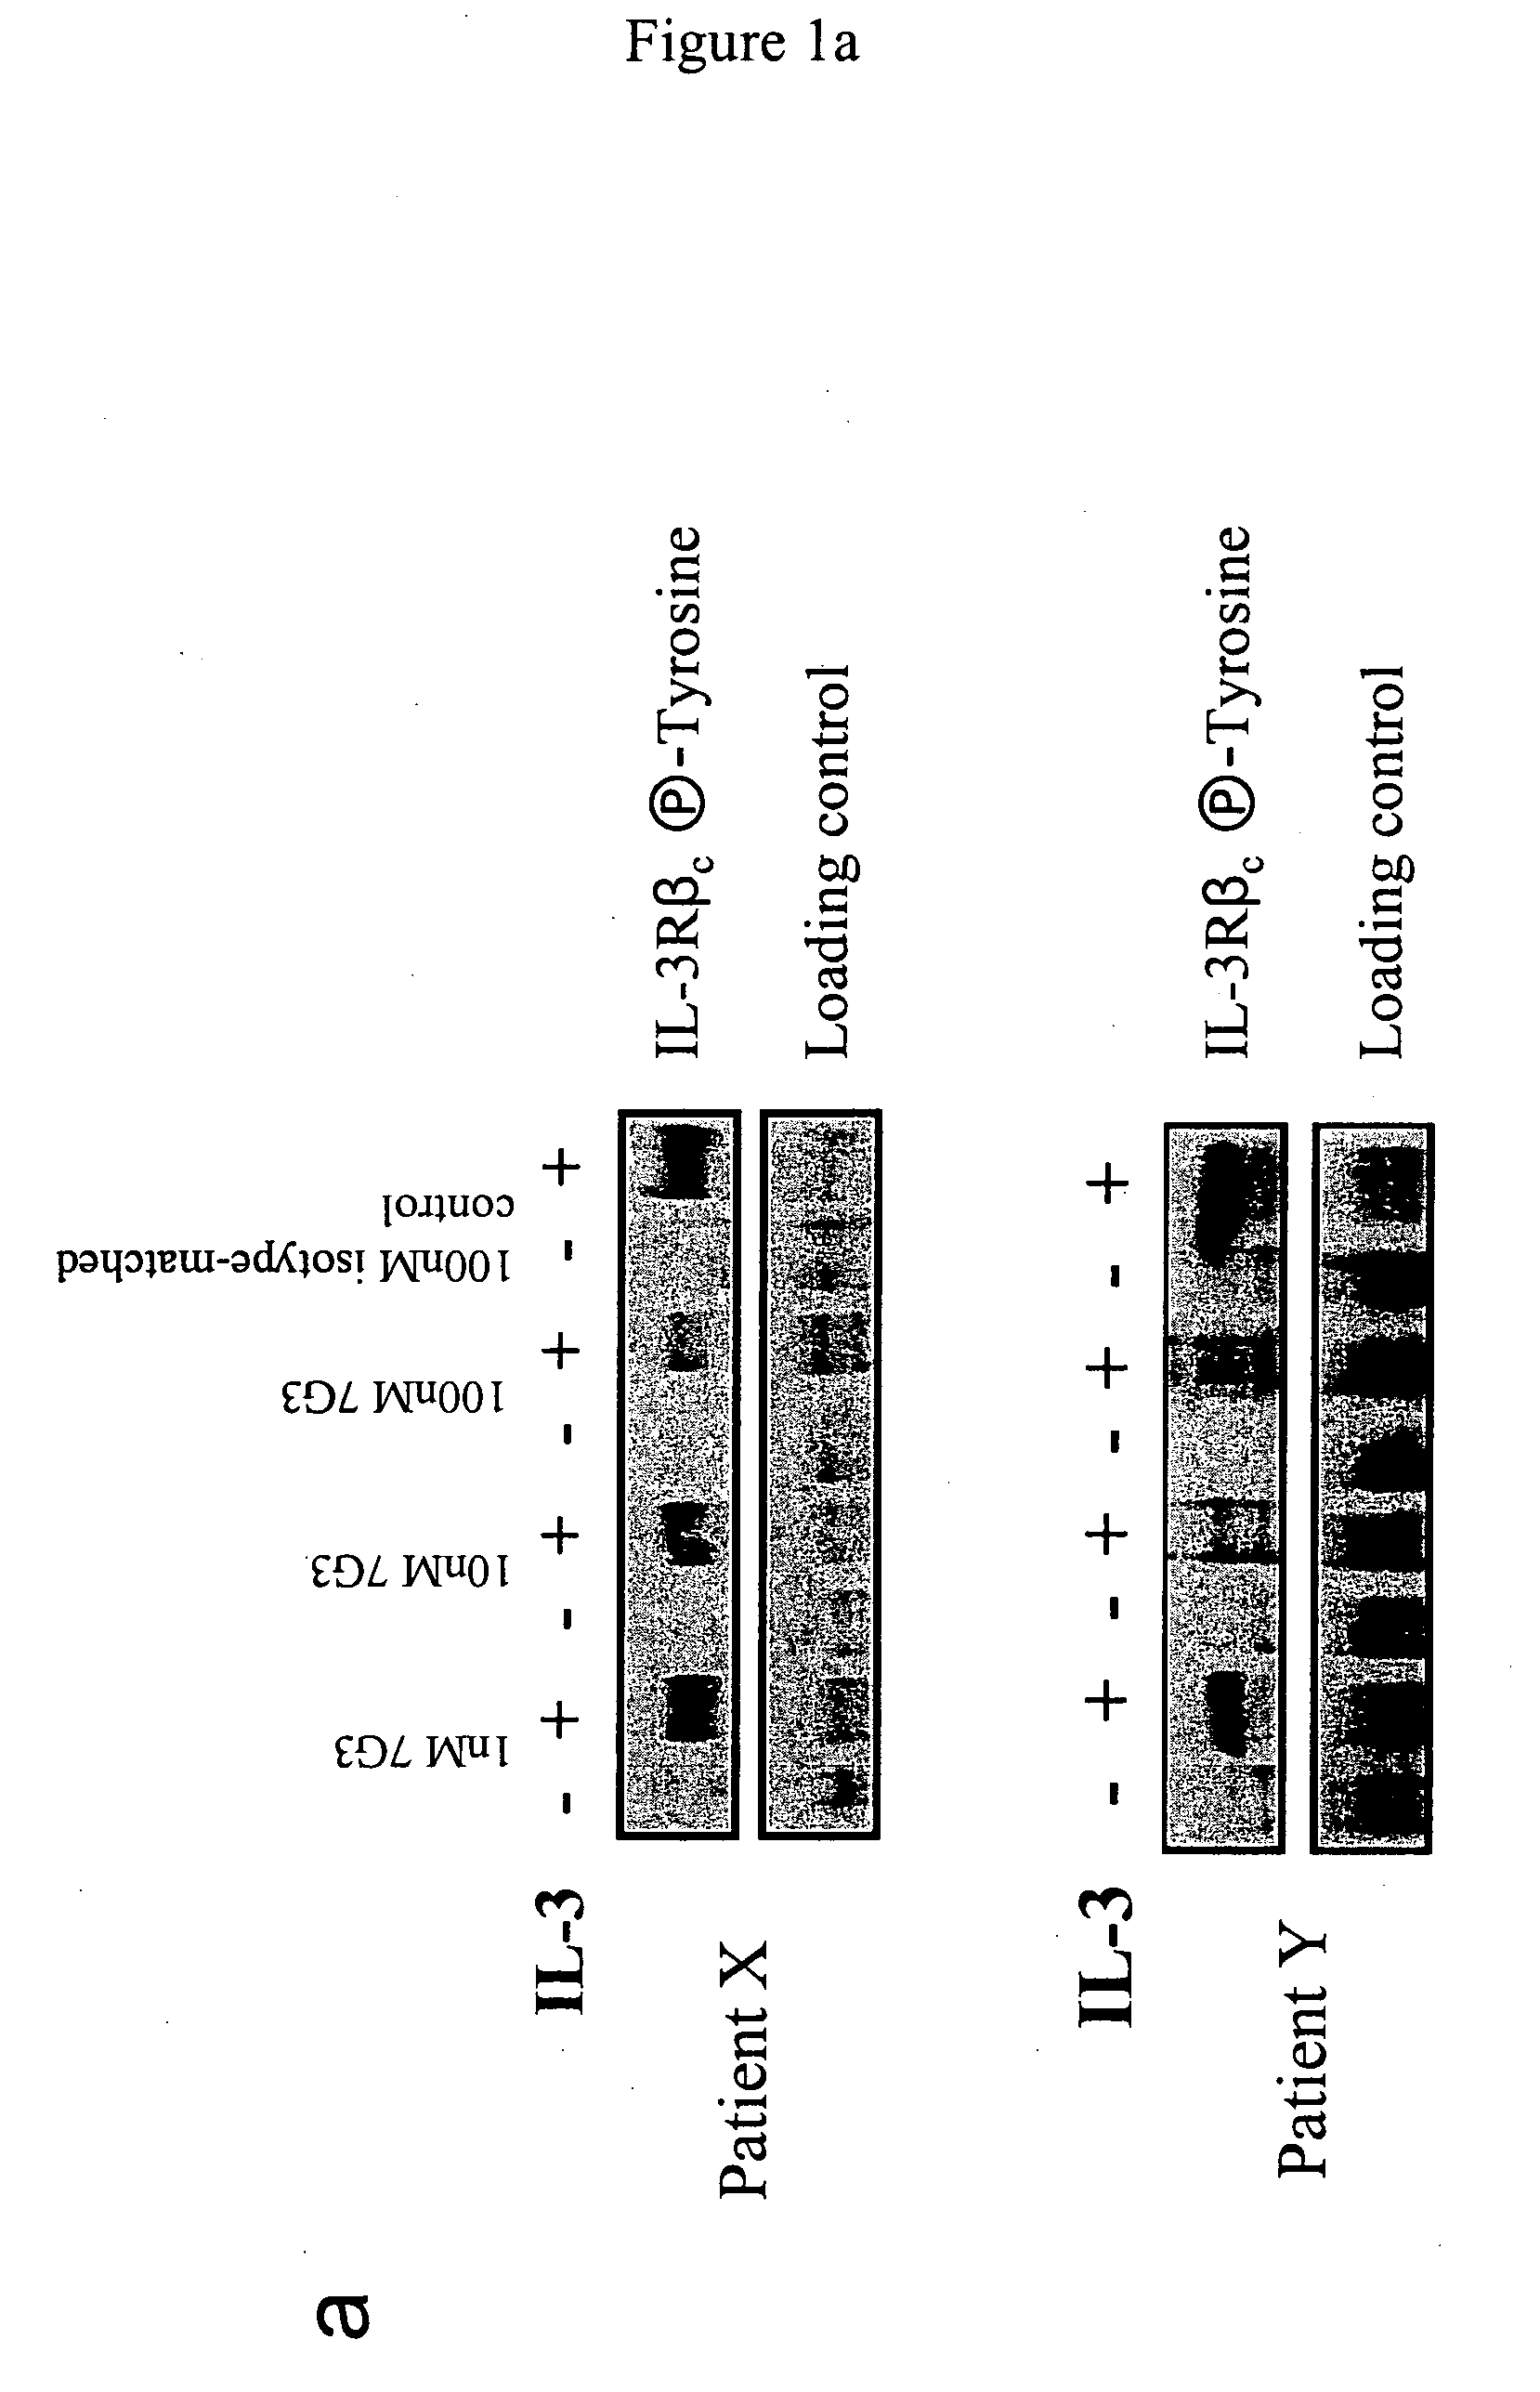 Method of inhibition of leukemic stem cells